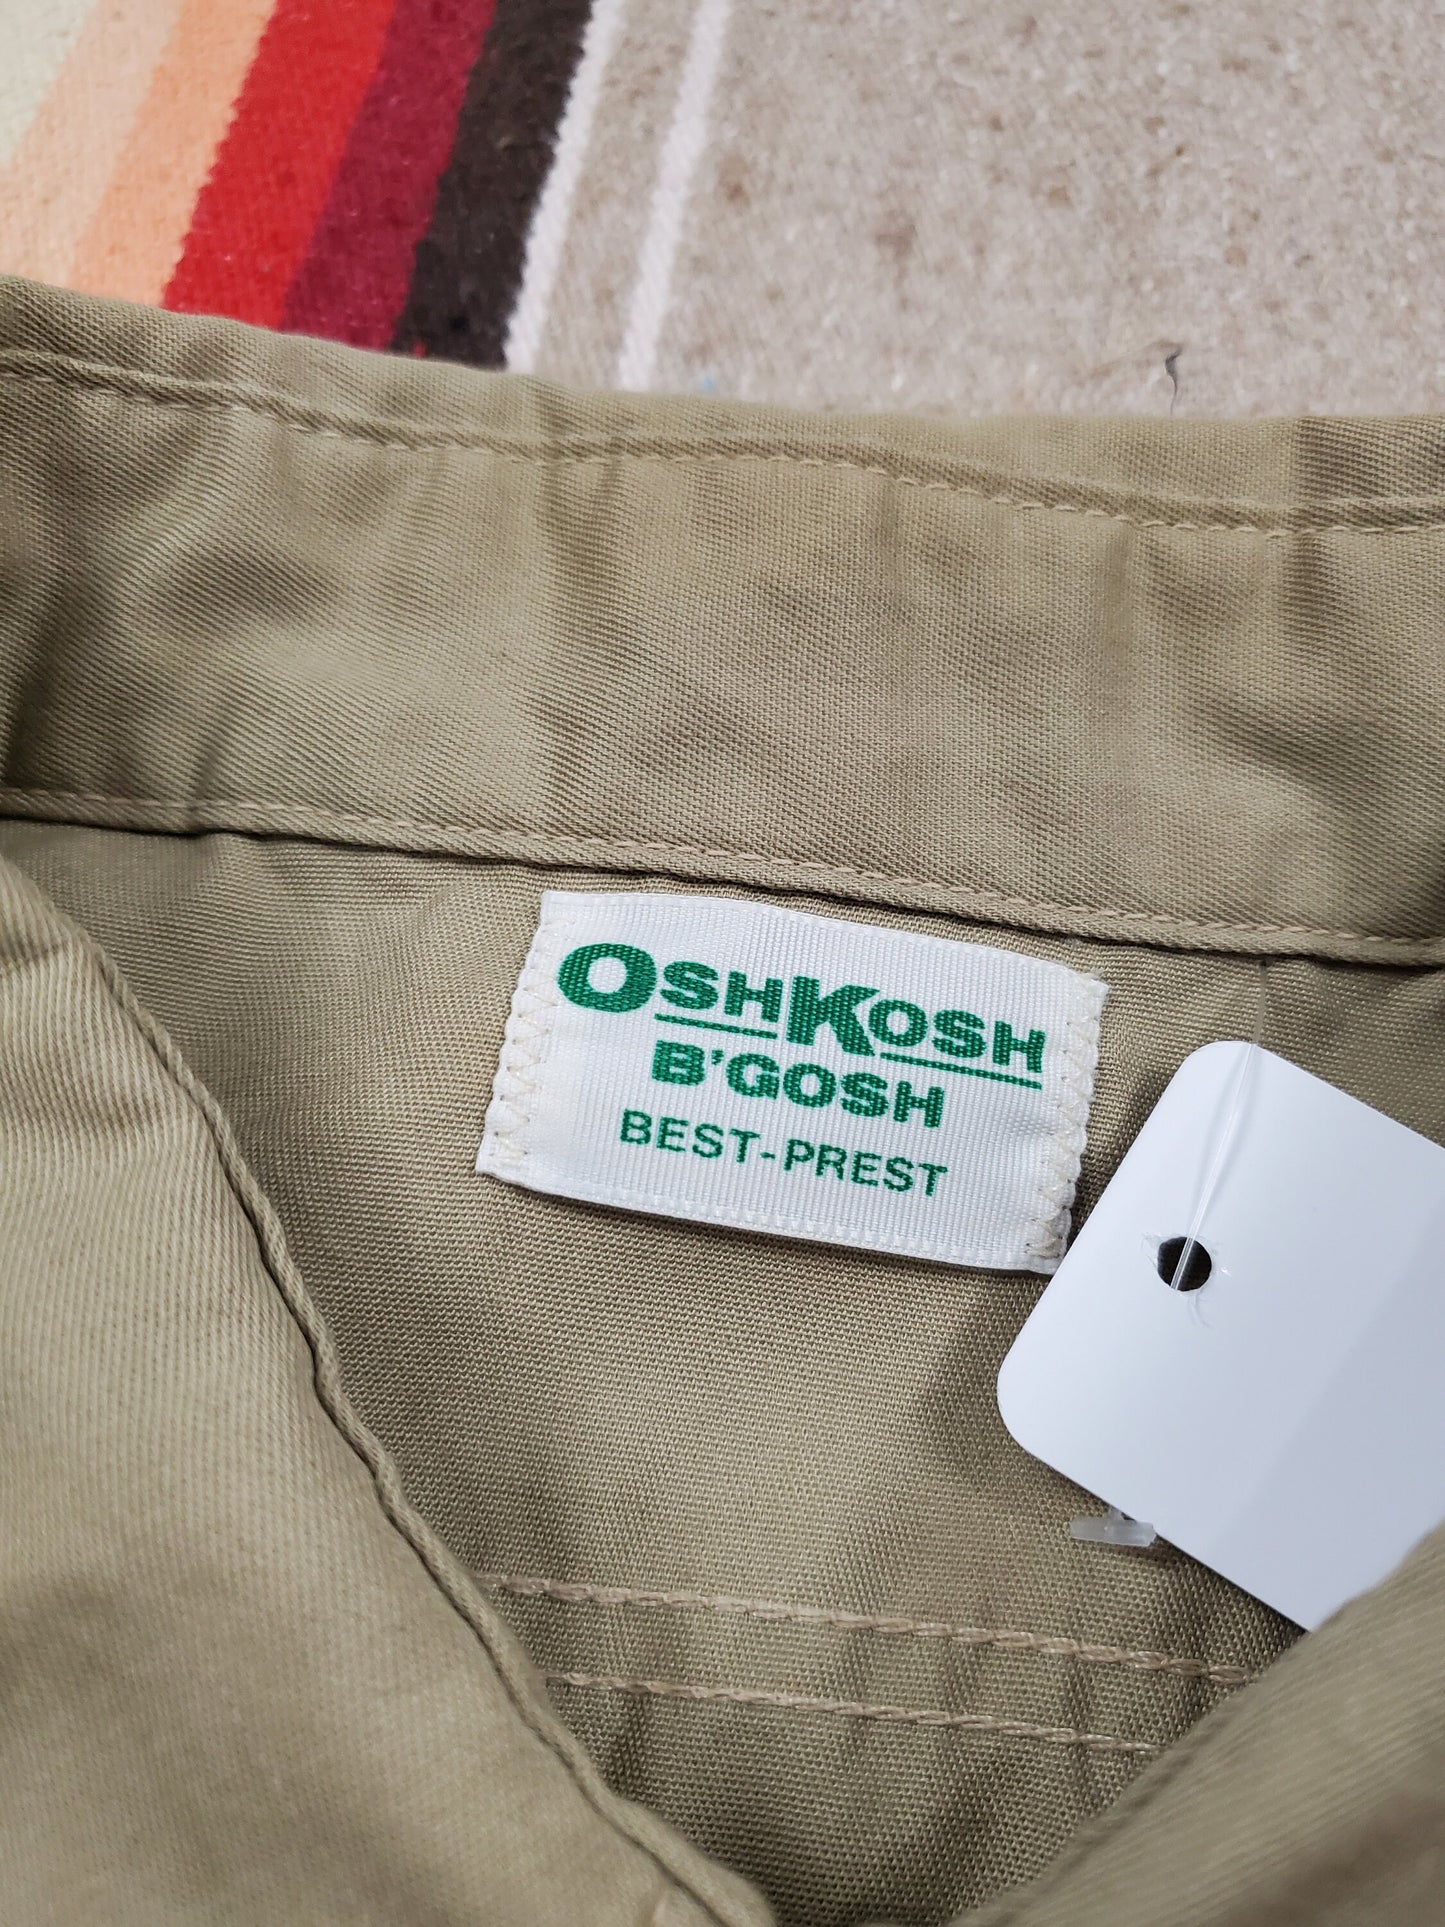 1980s OshKosh B'Gosh Best-Prest Snap Front Khaki Work Shirt Made in USA Size XXL